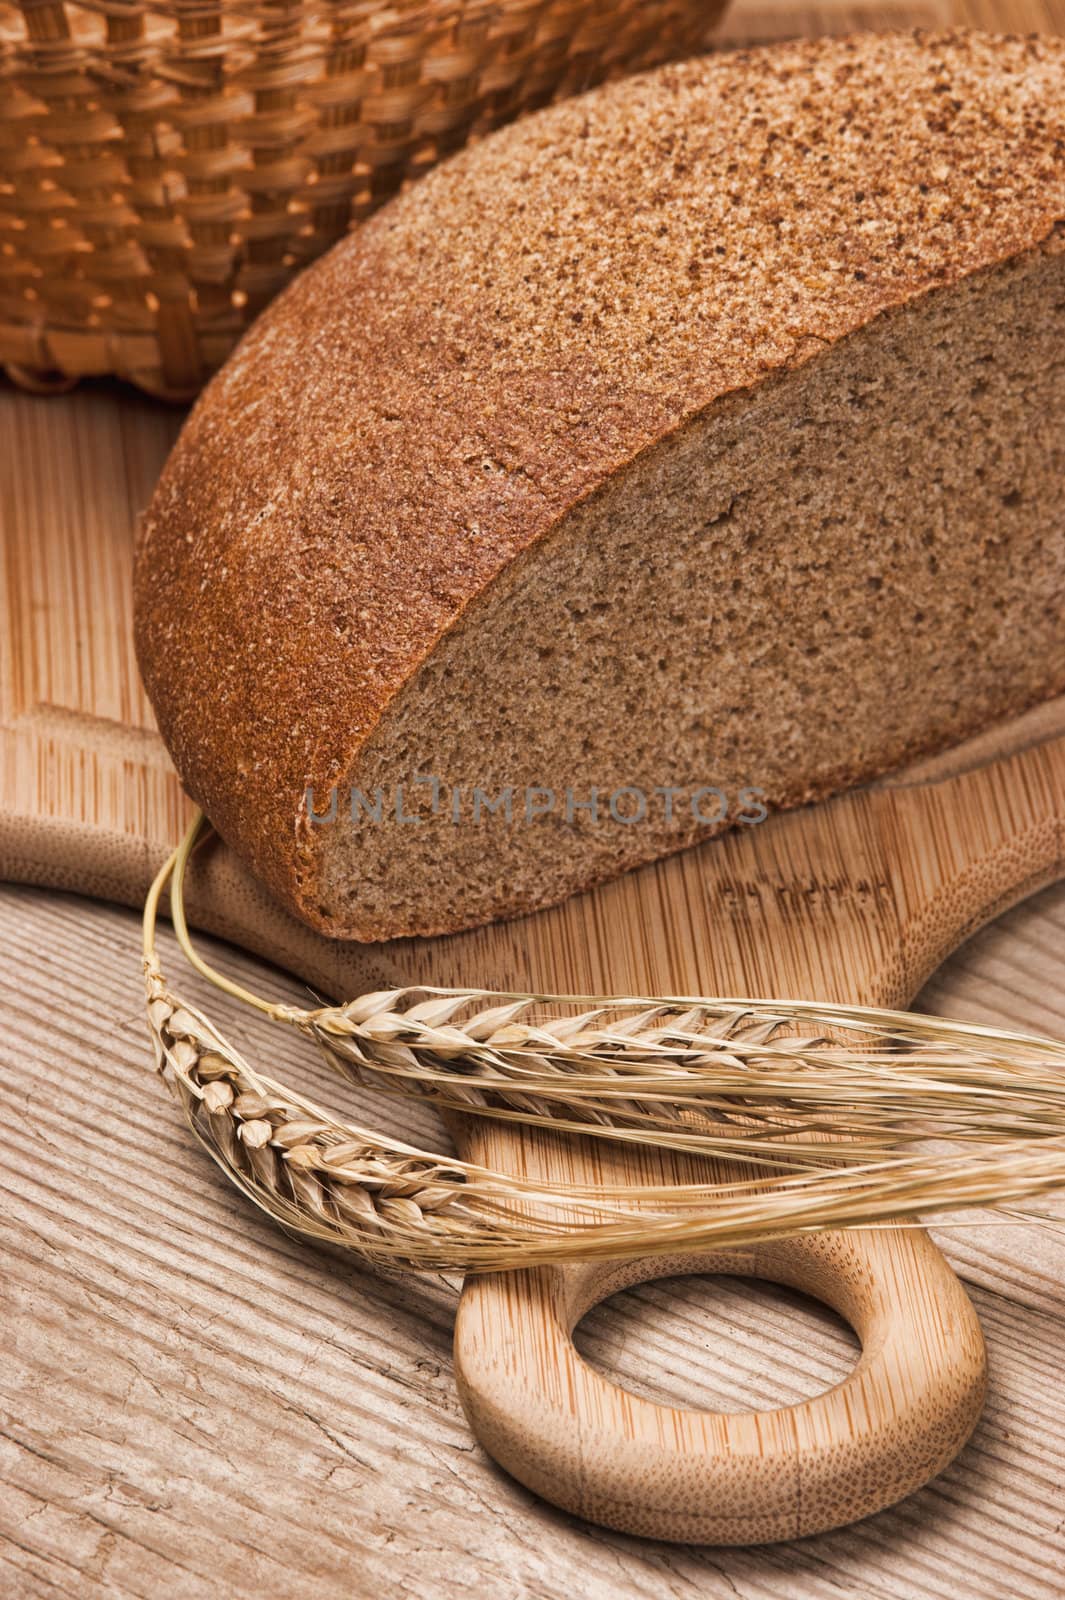 bread and ears by oleg_zhukov